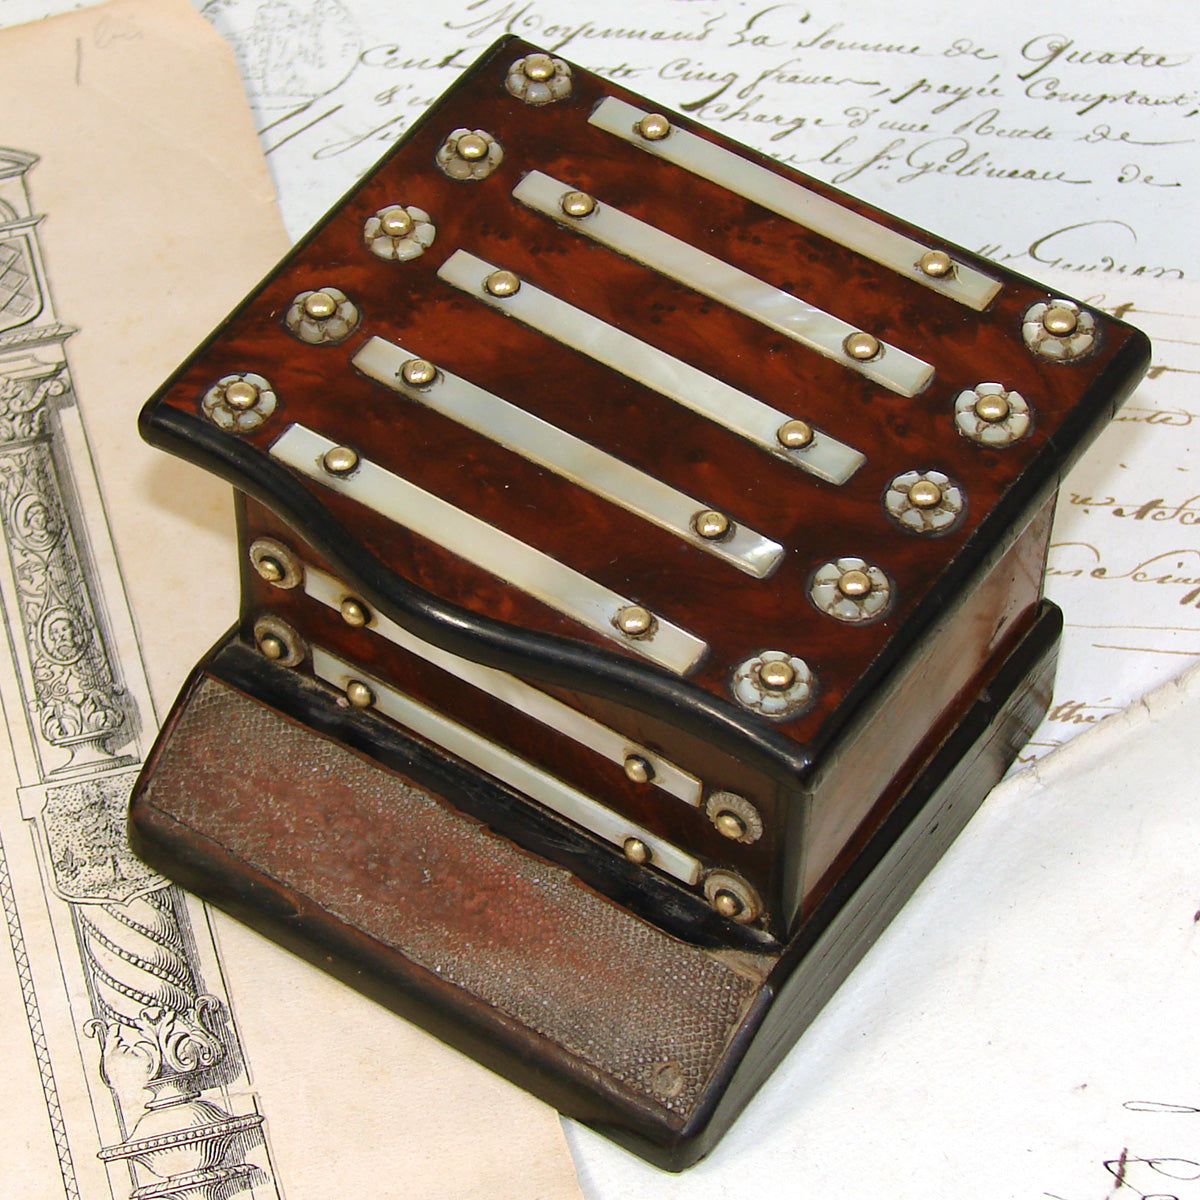 Rare Antique French Napoleon III Era Match Holder Box, Casket, Burl & Mother of Pearl